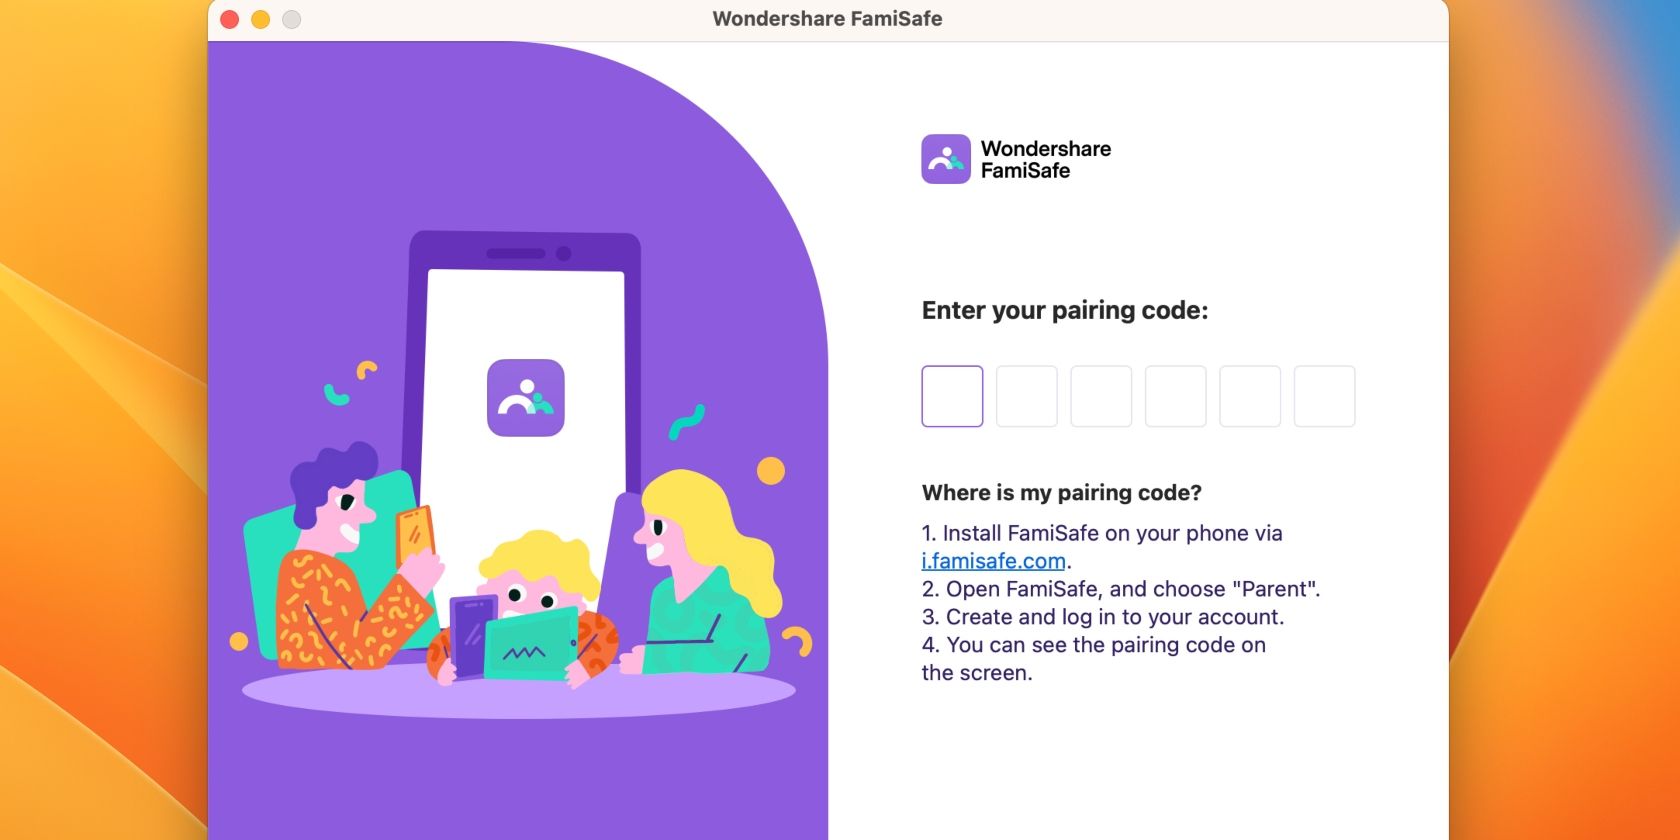 Wondershare FamiSafe app installation page